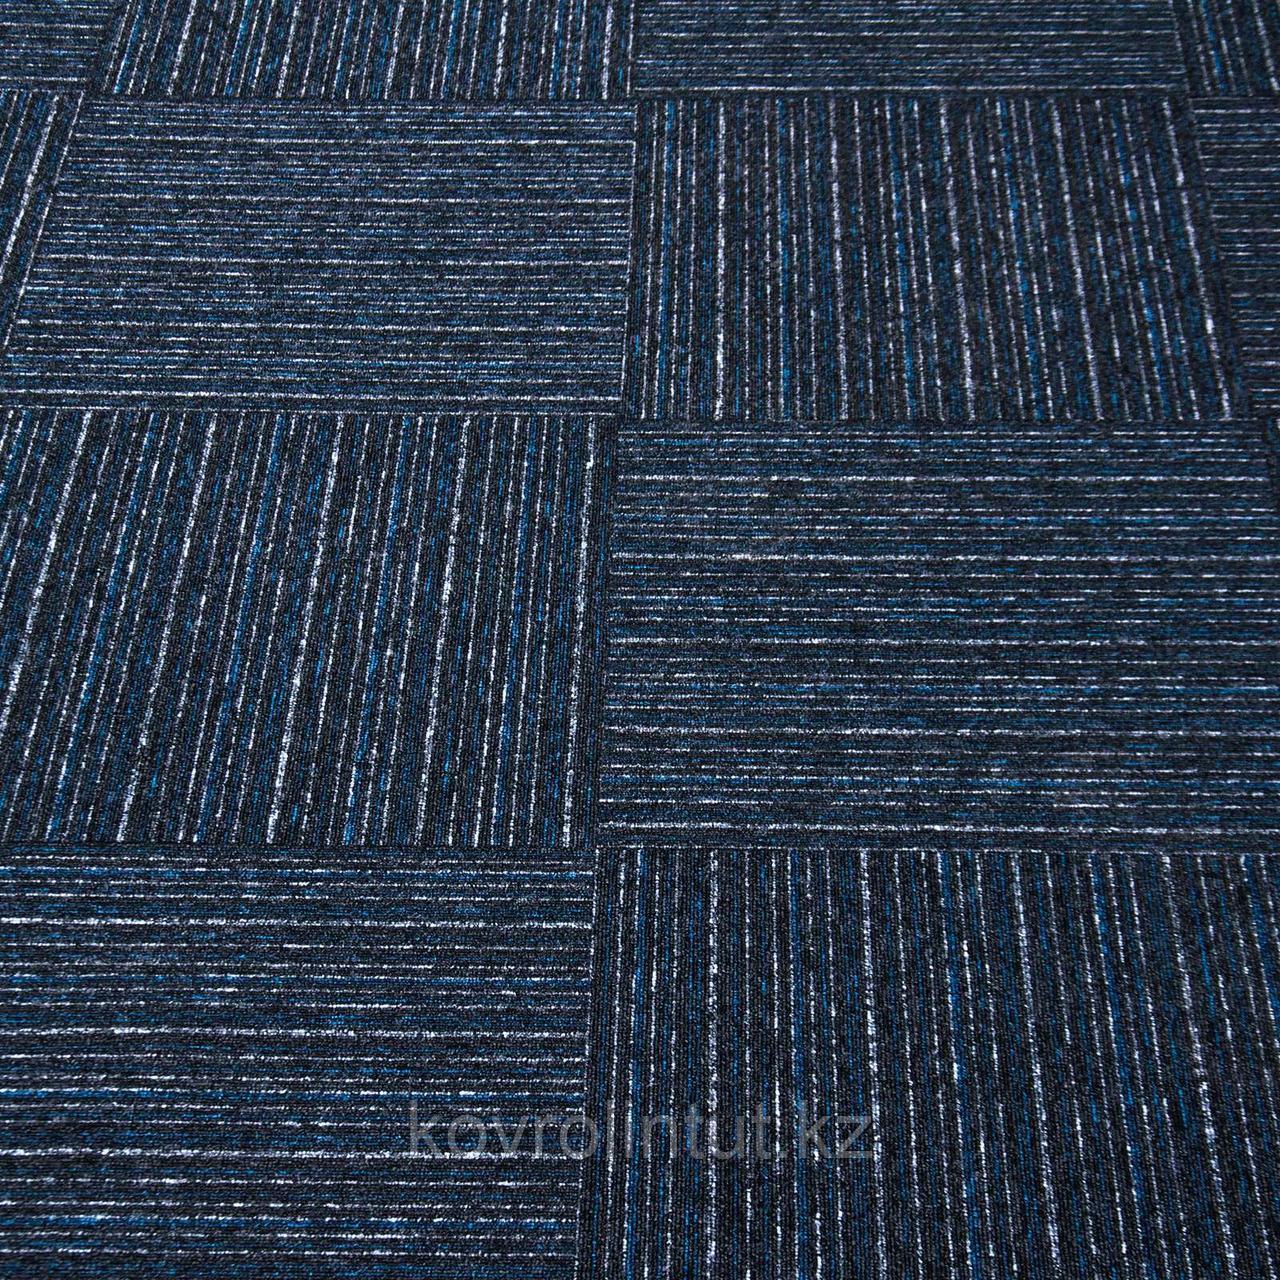 Плитка ковровая Сondor, Solid stripe 578, 50х50, 5м2/уп